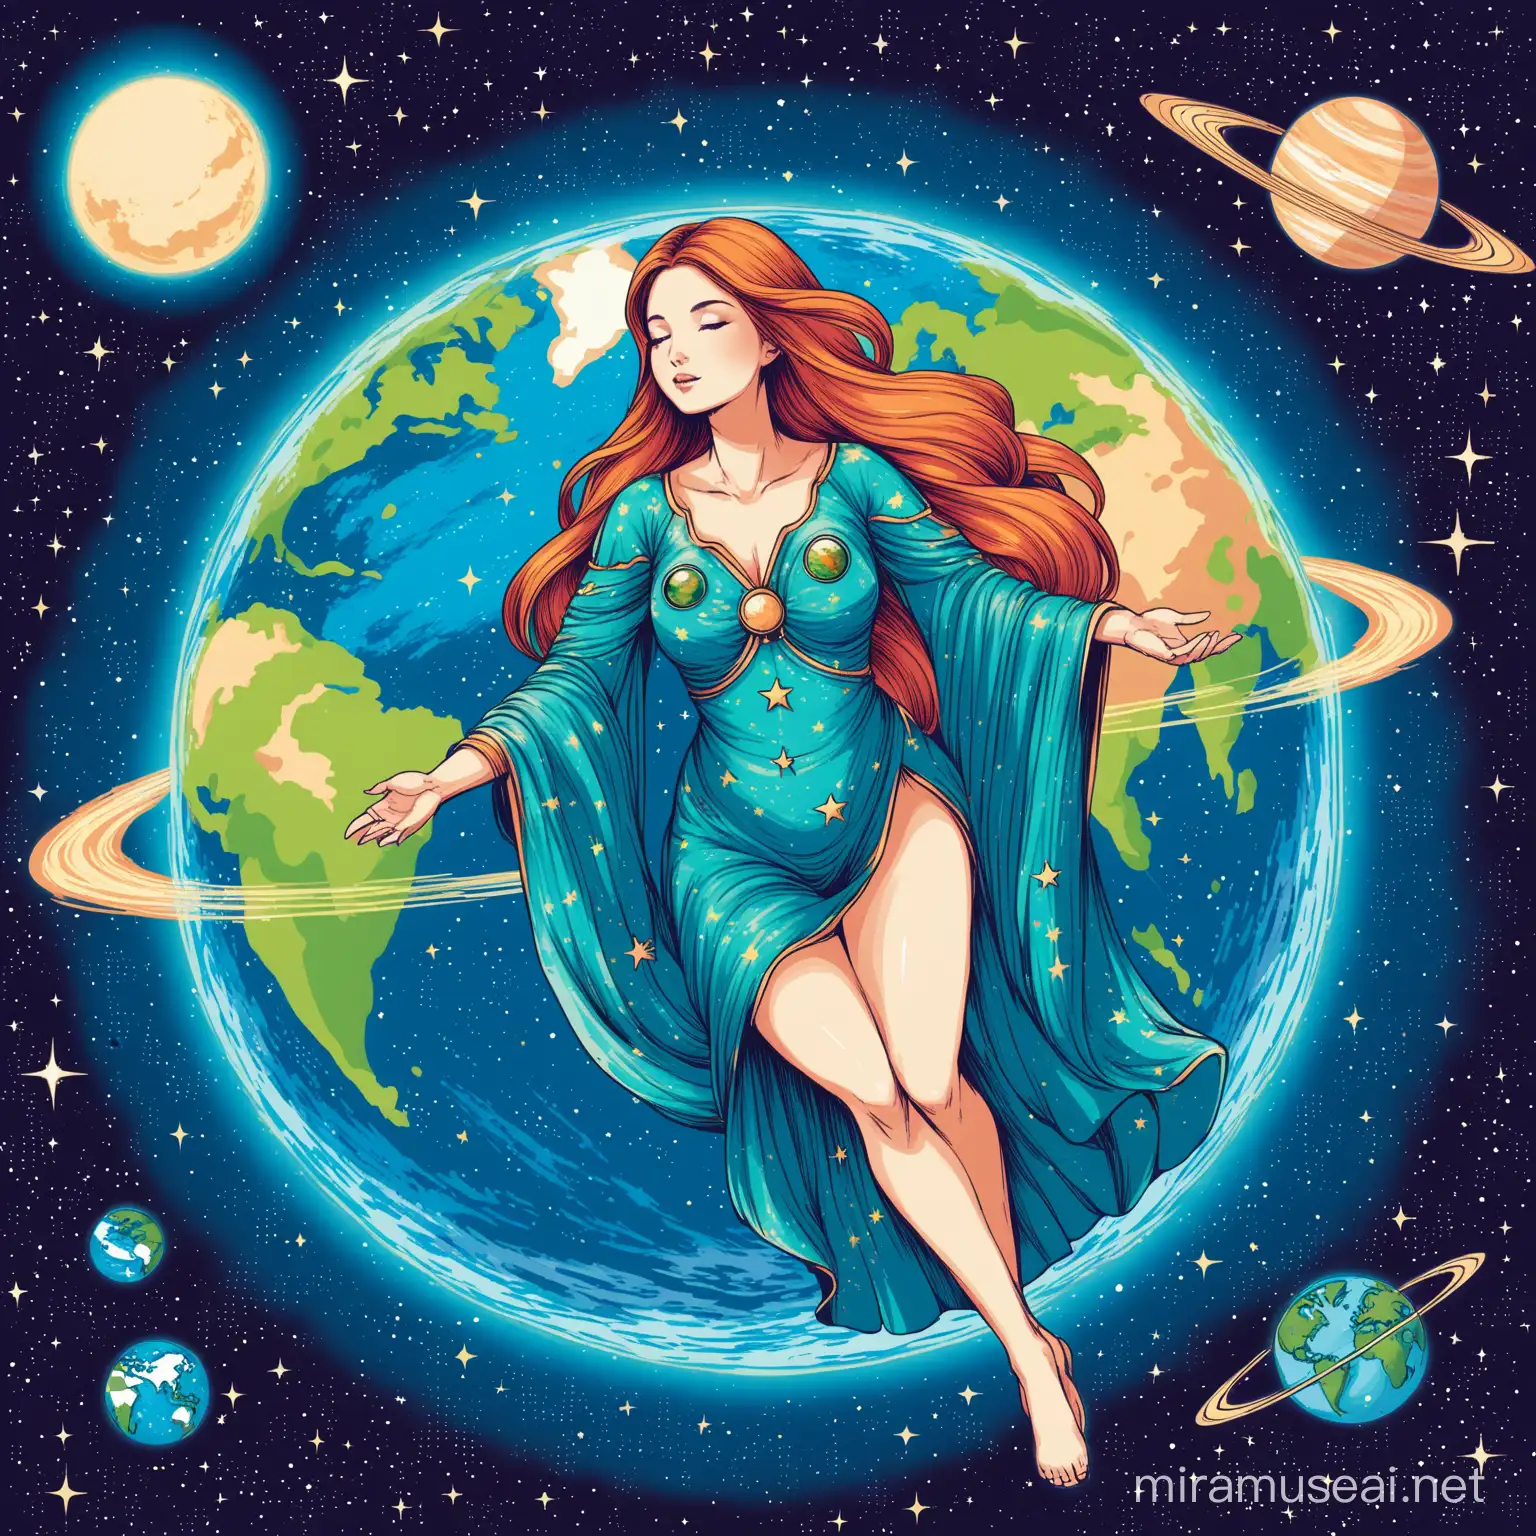 Celestial Woman Embodied as Earth Cosmic Feminine Energy Art